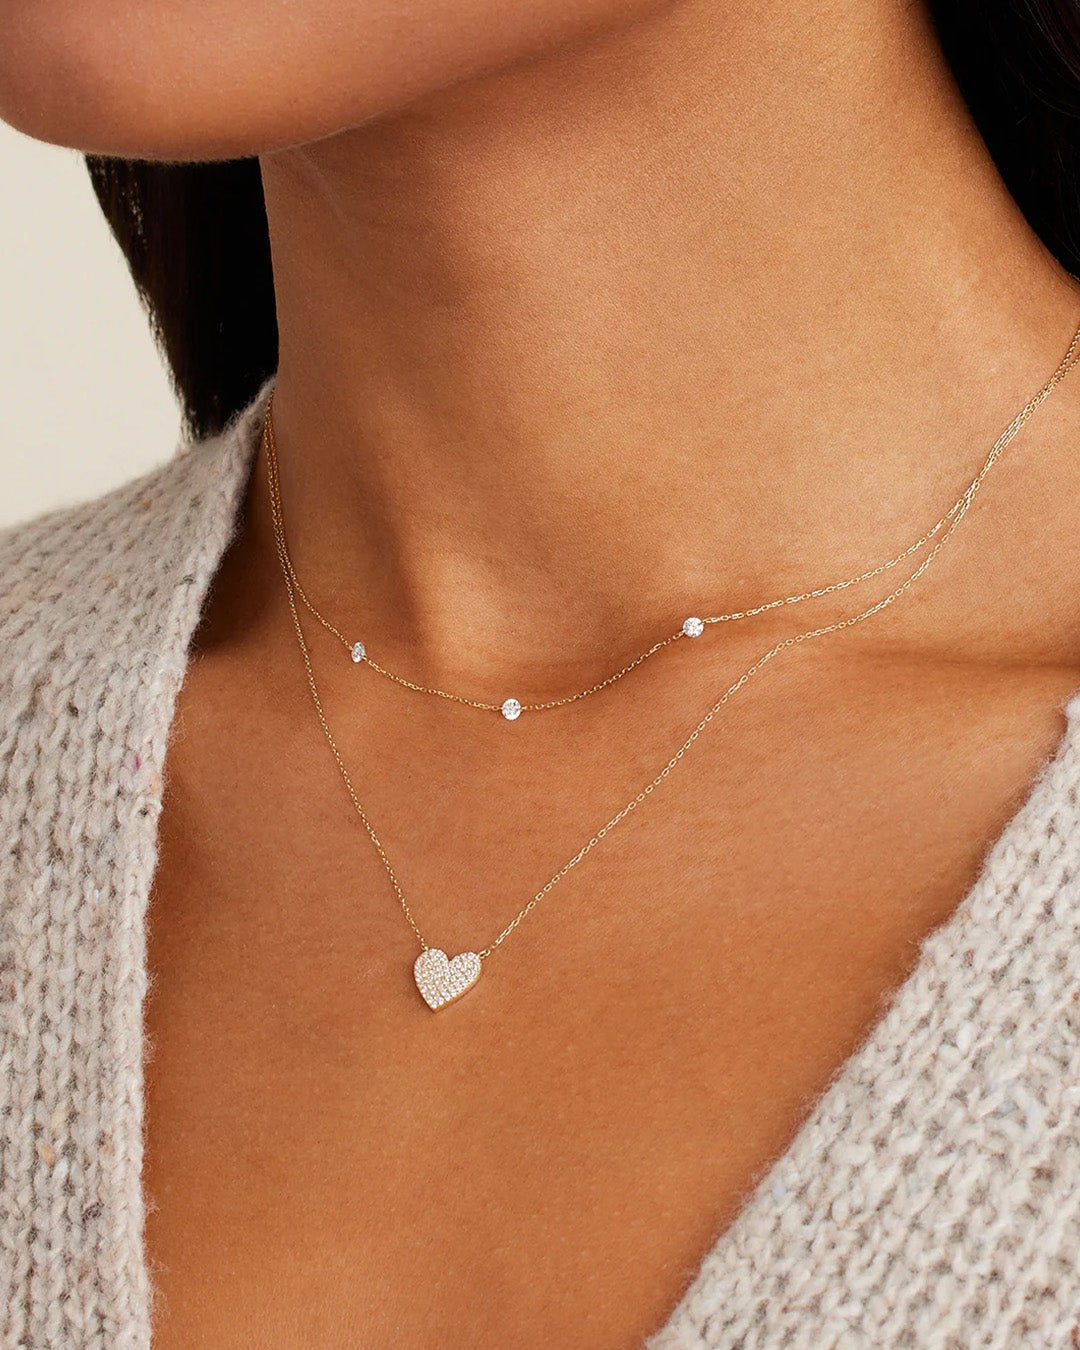 Gorjana Women's Heart Necklace